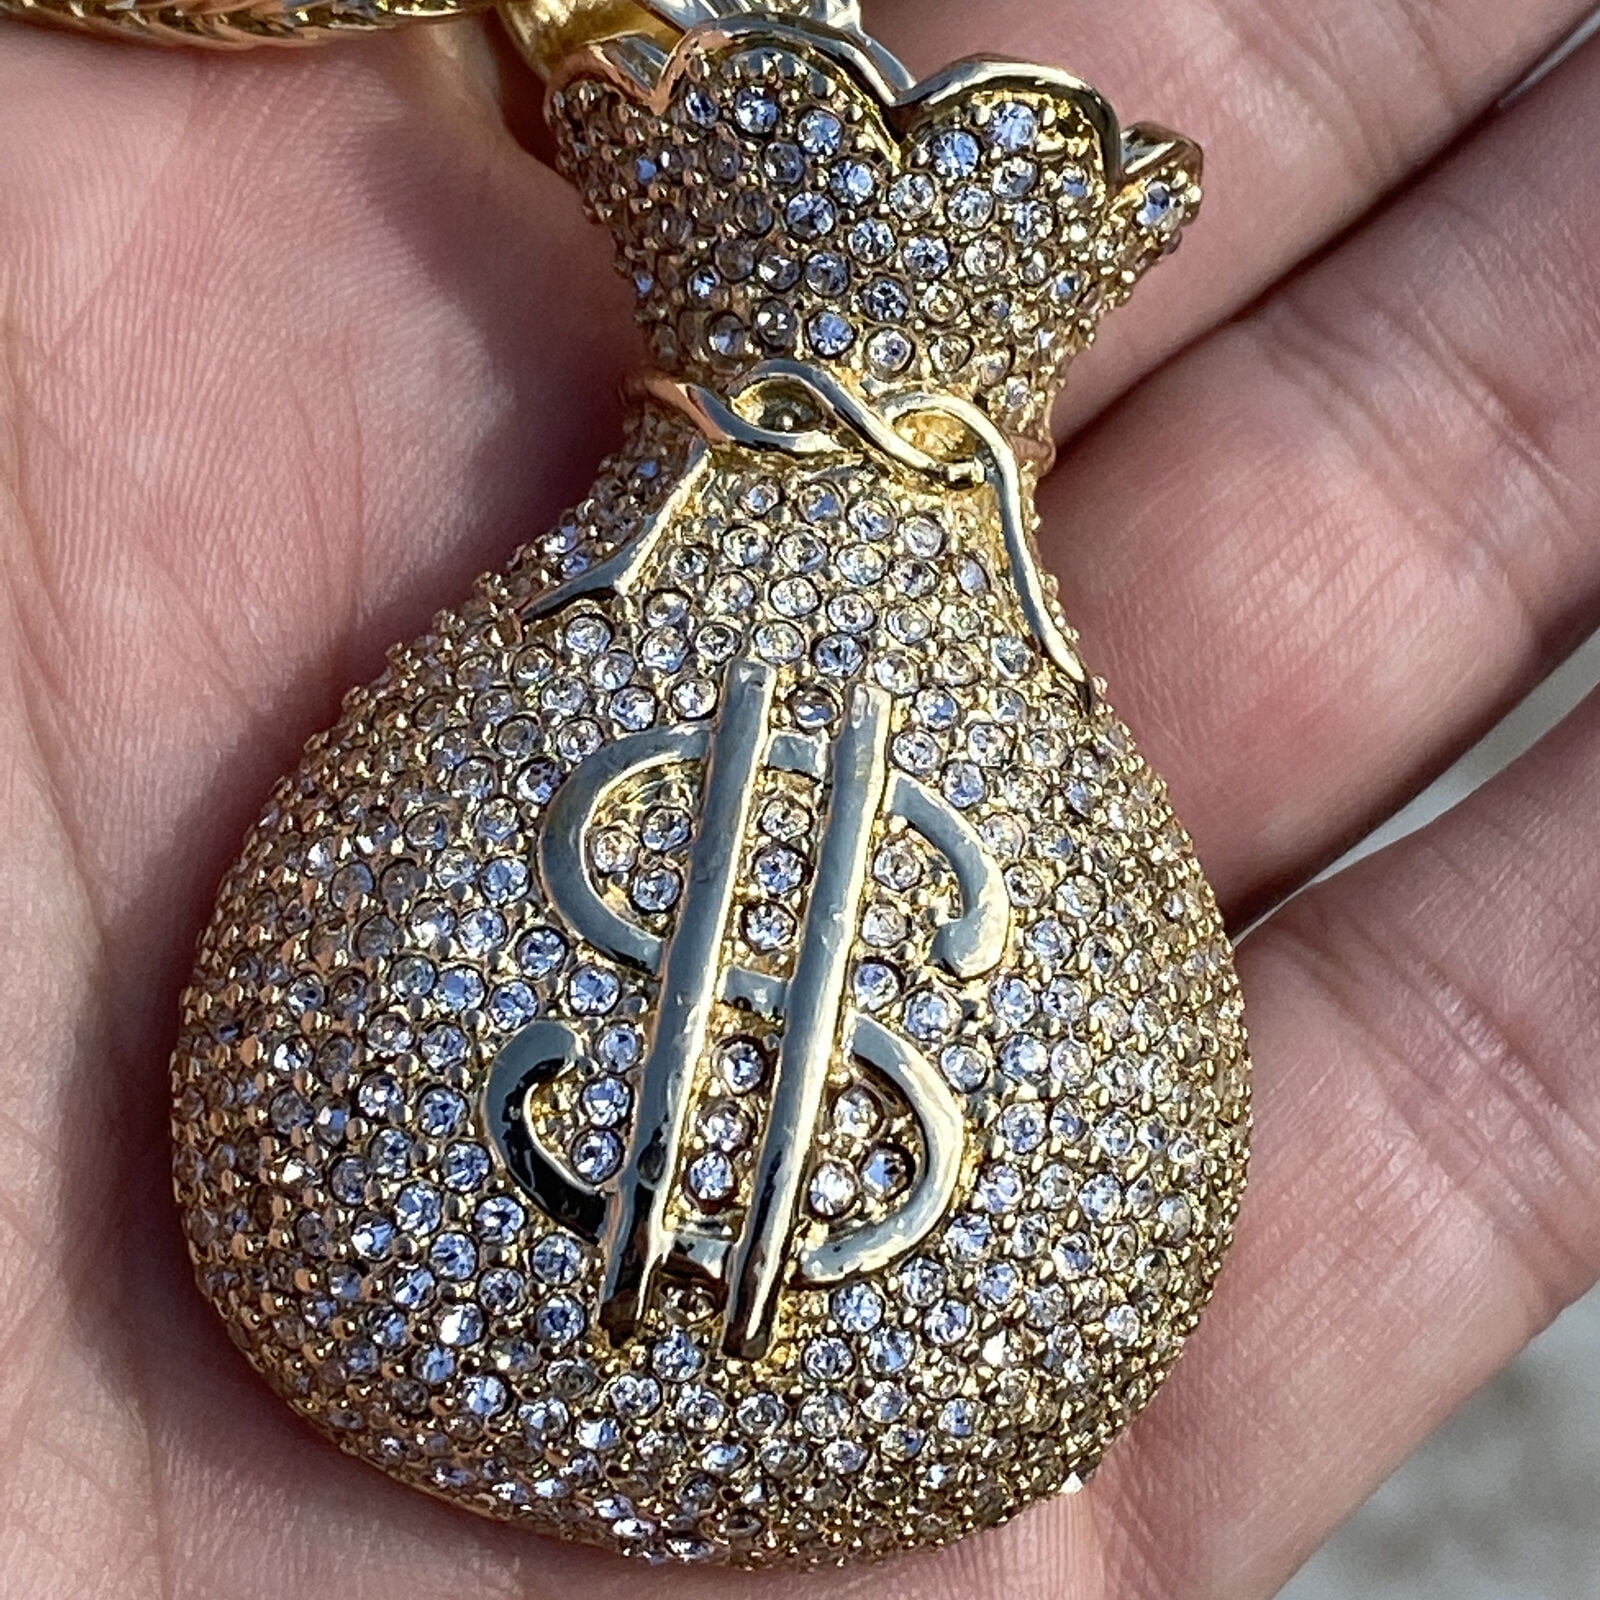 10k Yellow Gold Diamond Money Bag Pendant 0.35 Ctw – Avianne Jewelers